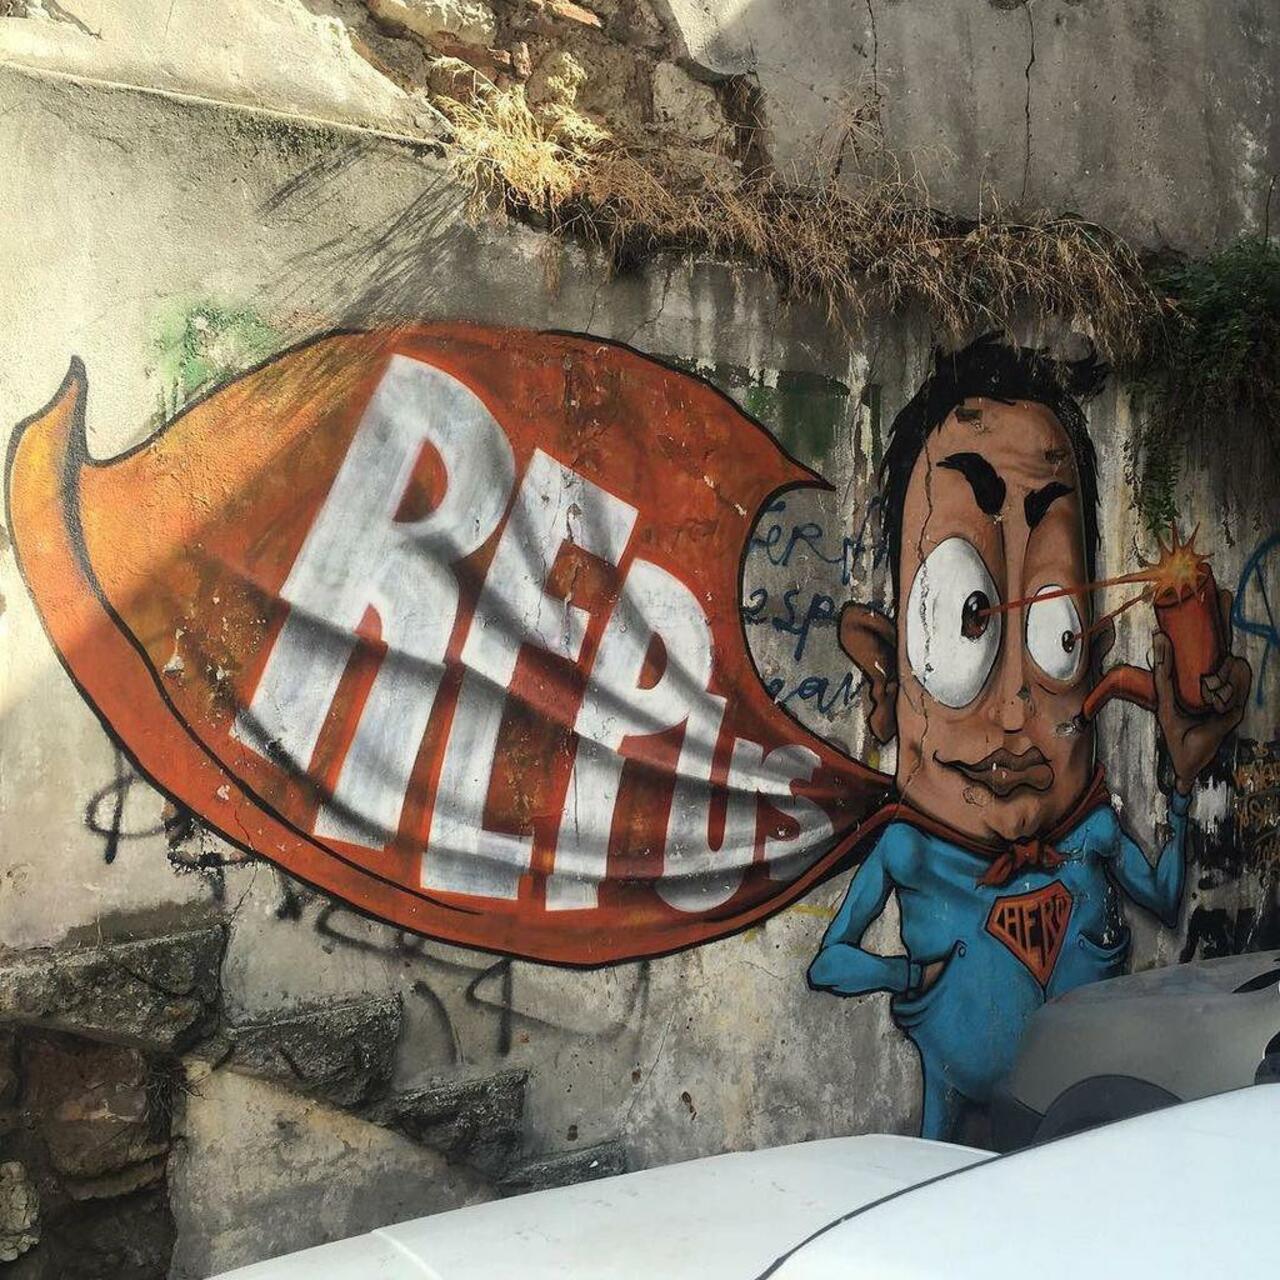 RT @StArtEverywhere: Graffiti Mural
Karakoy, Istanbul
#graff #graffiti #graffitiistanbul #graffitikatakon #graffitidubrovnik #graffitiko… http://t.co/4zv1kCq7aK